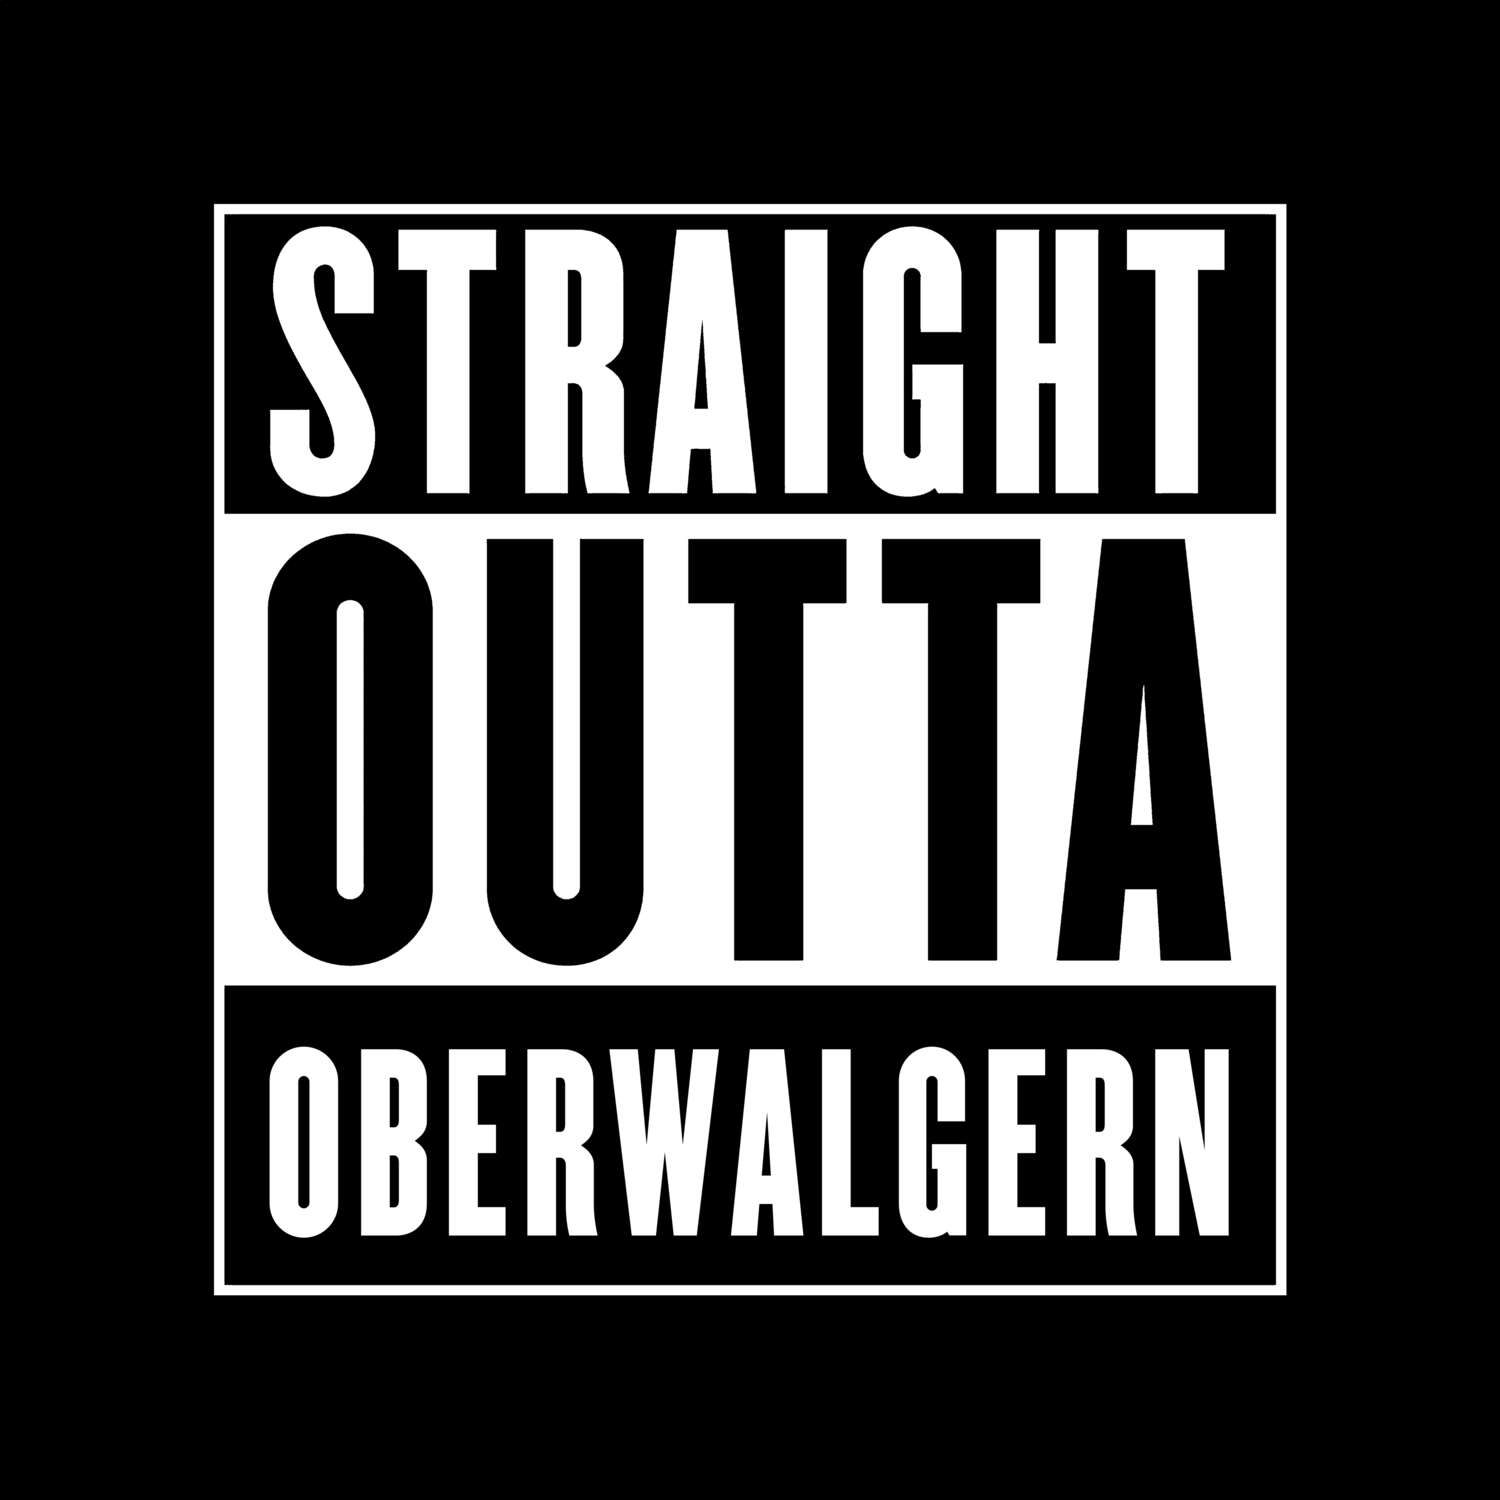 Oberwalgern T-Shirt »Straight Outta«